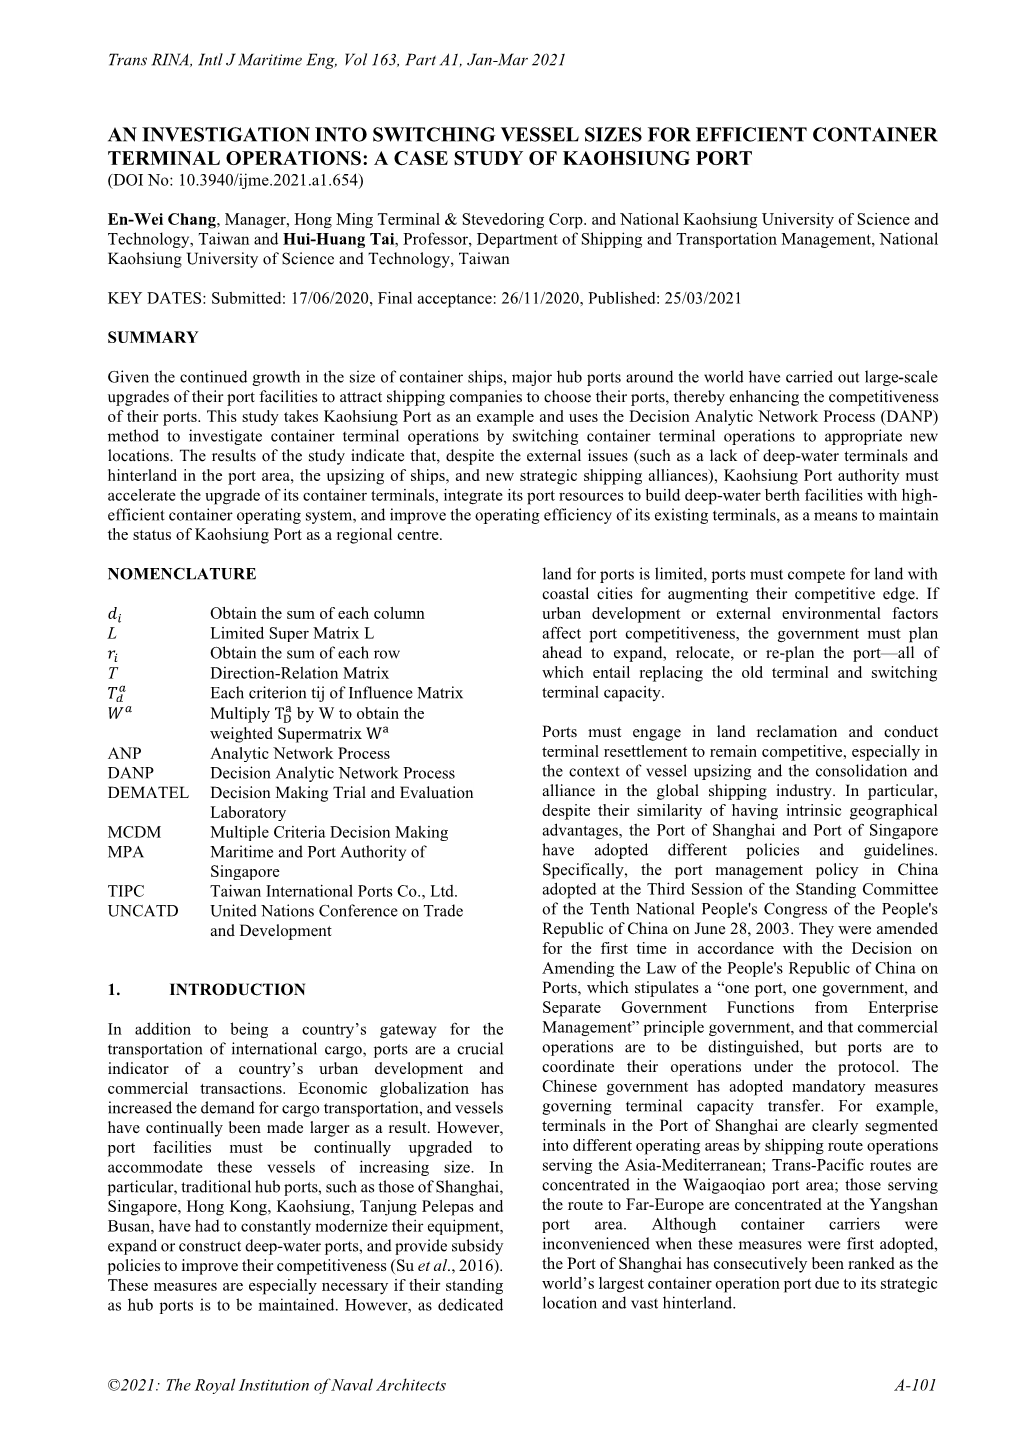 A CASE STUDY of KAOHSIUNG PORT (DOI No: 10.3940/Ijme.2021.A1.654)